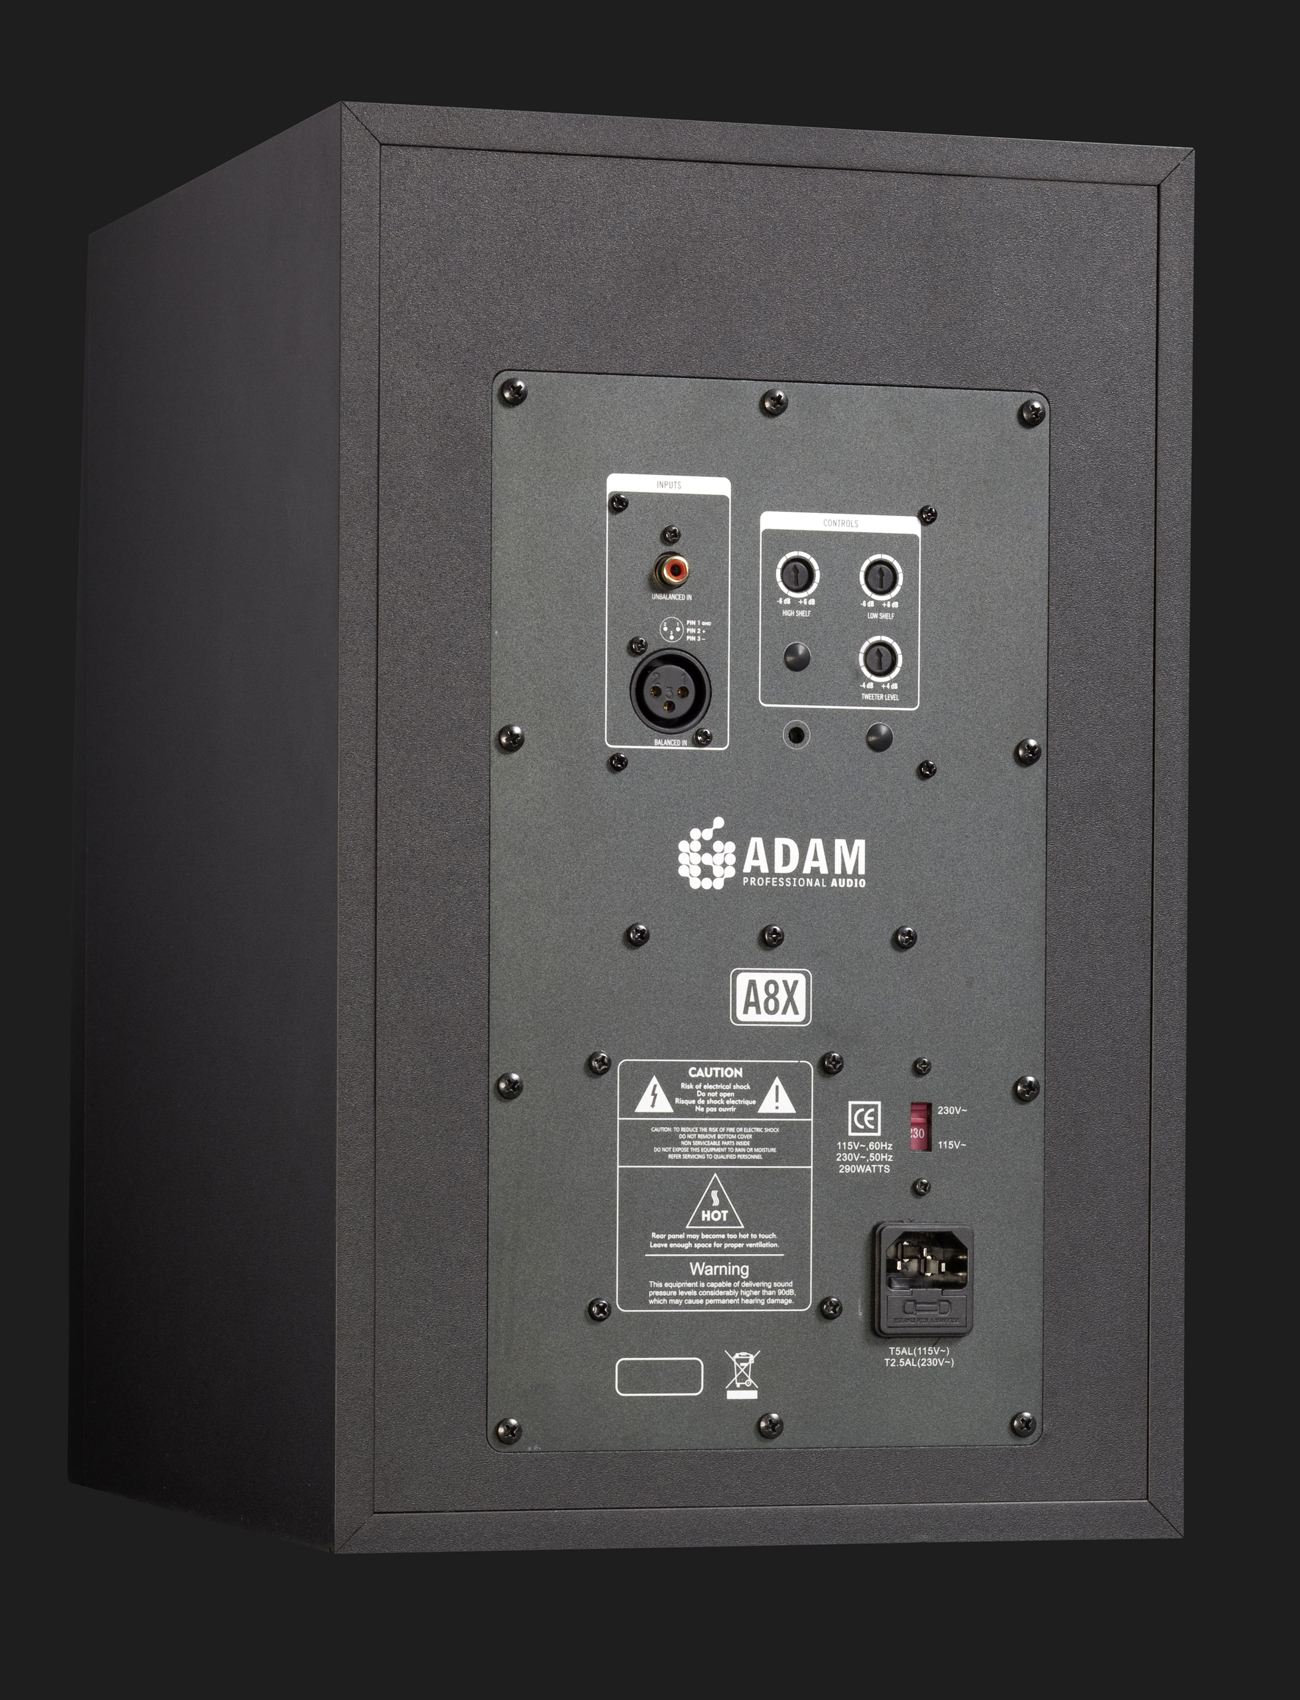 adam-audio-a8x-nearfield-monitor-backside.jpg (989 KB)